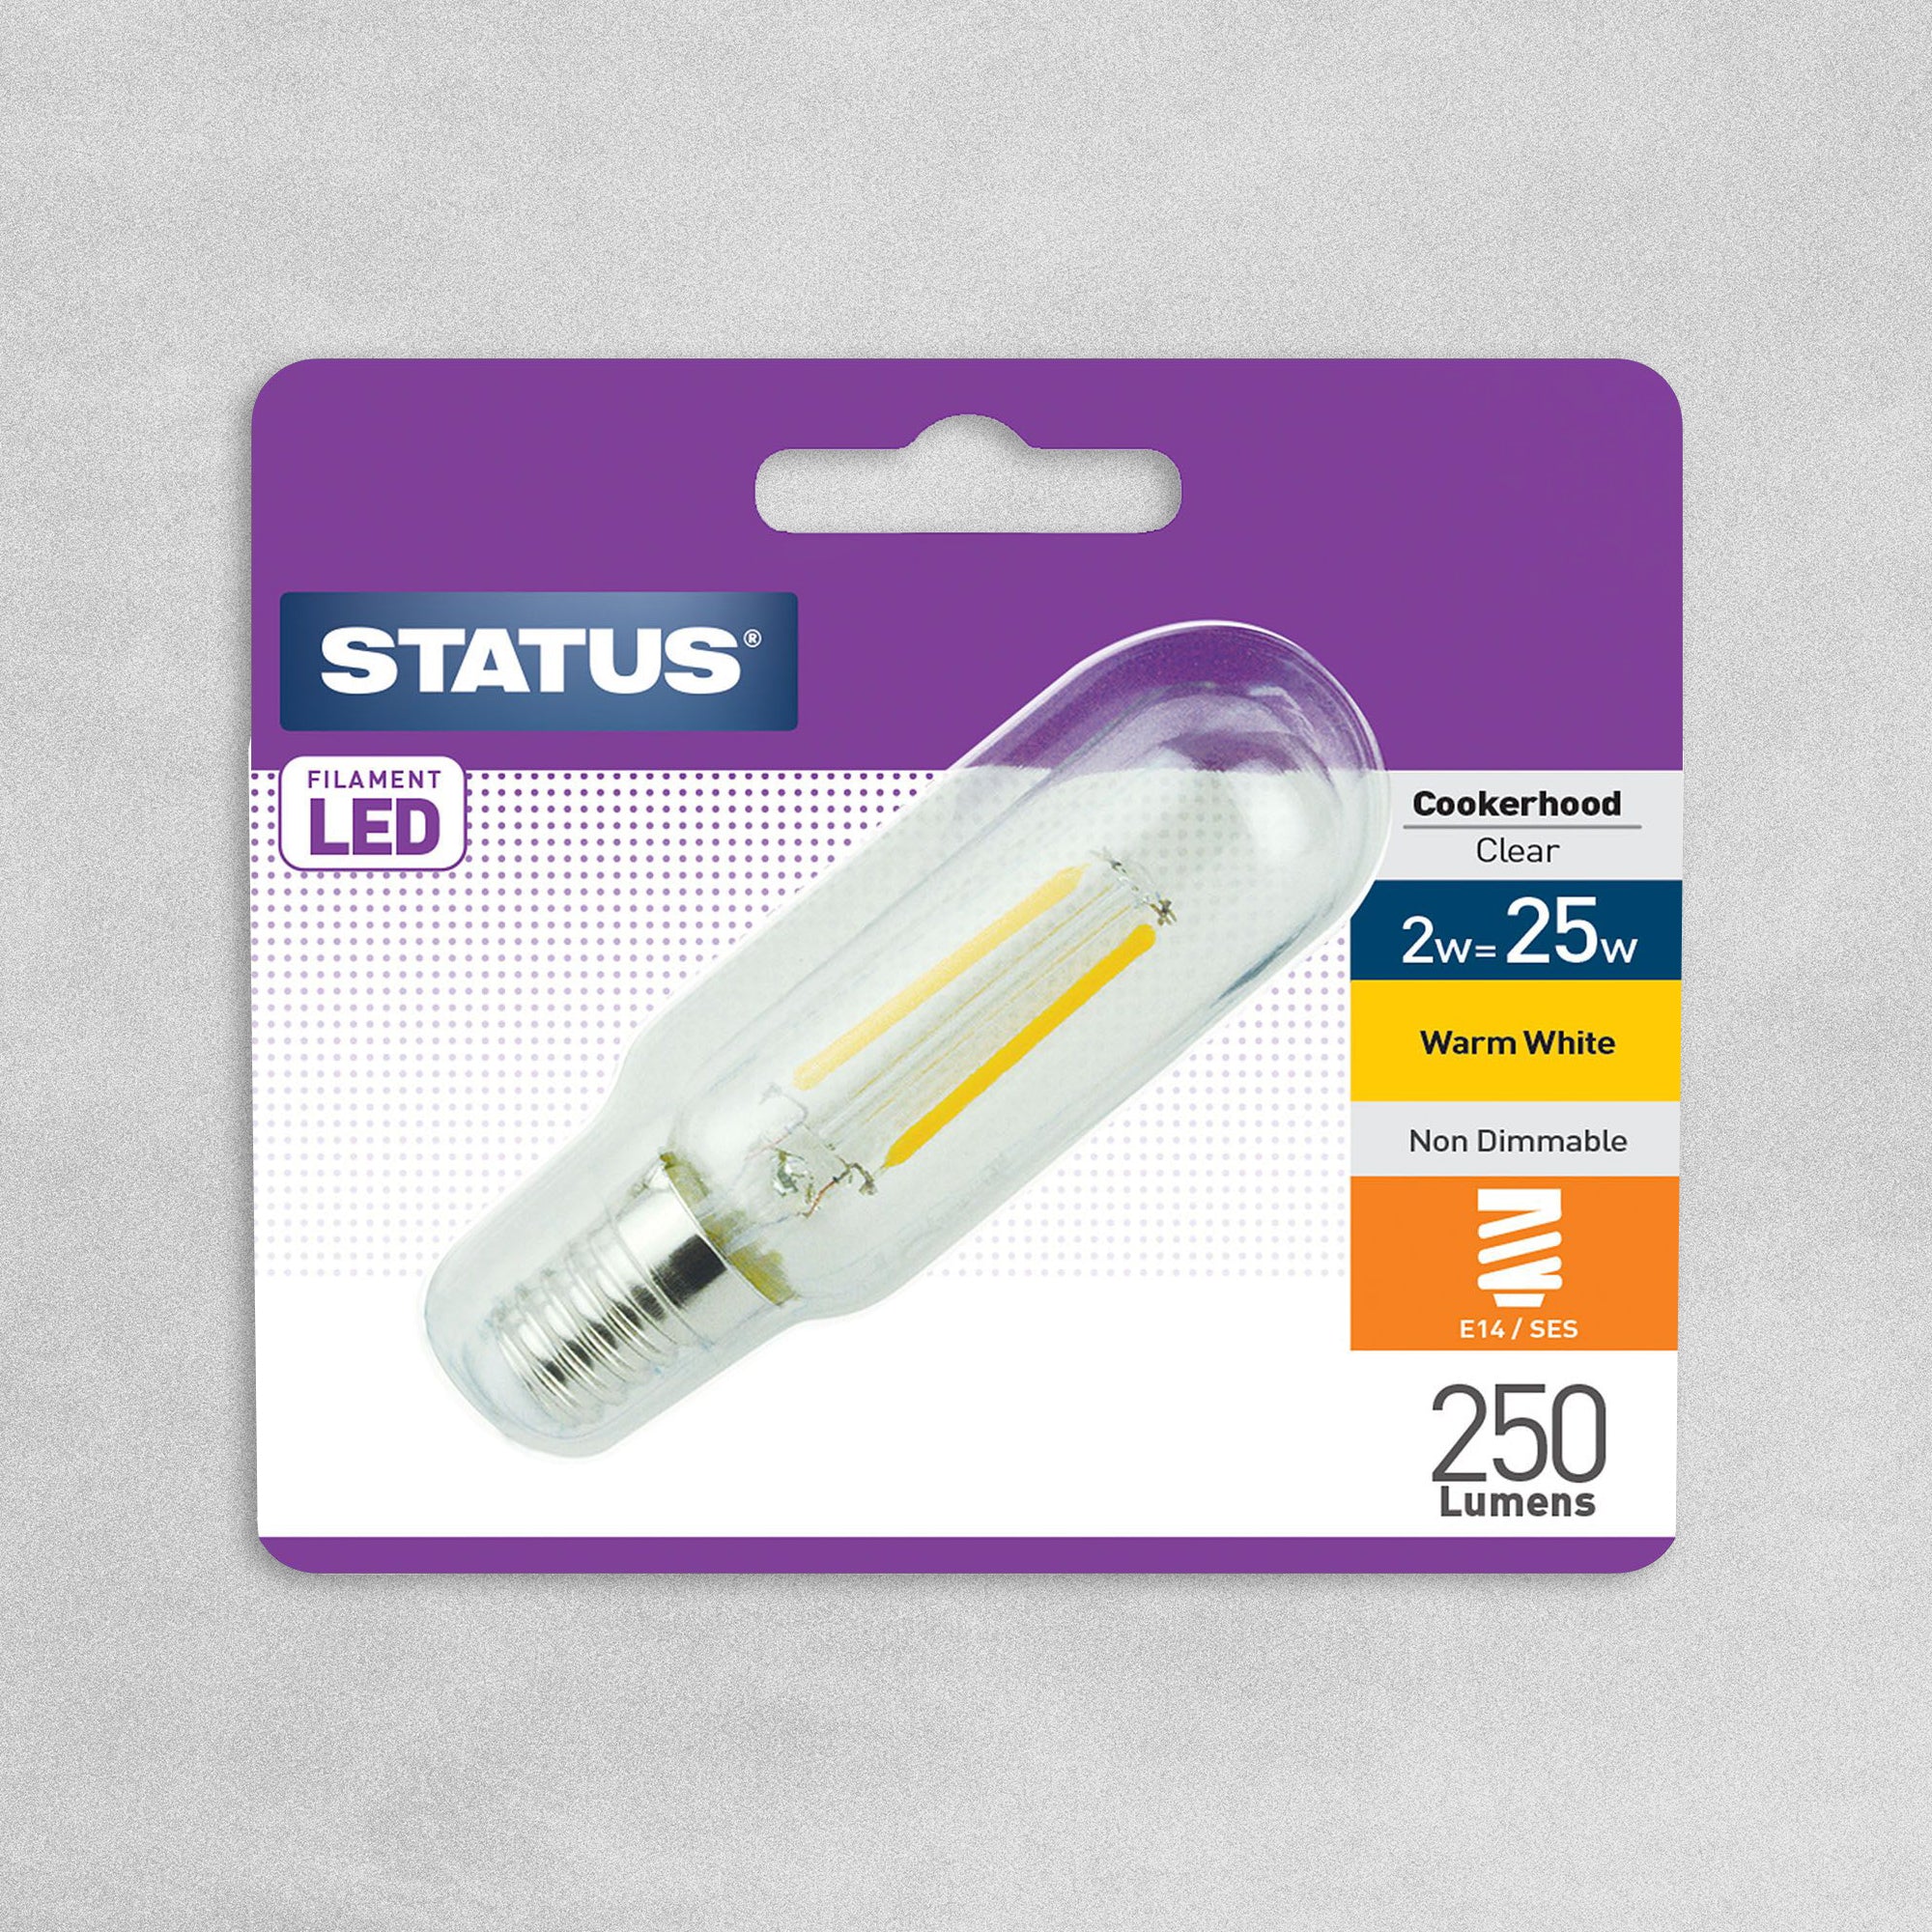 Status Filament LED Cookerhood Clear Bulb E14/SES 2w=25w - Warm White